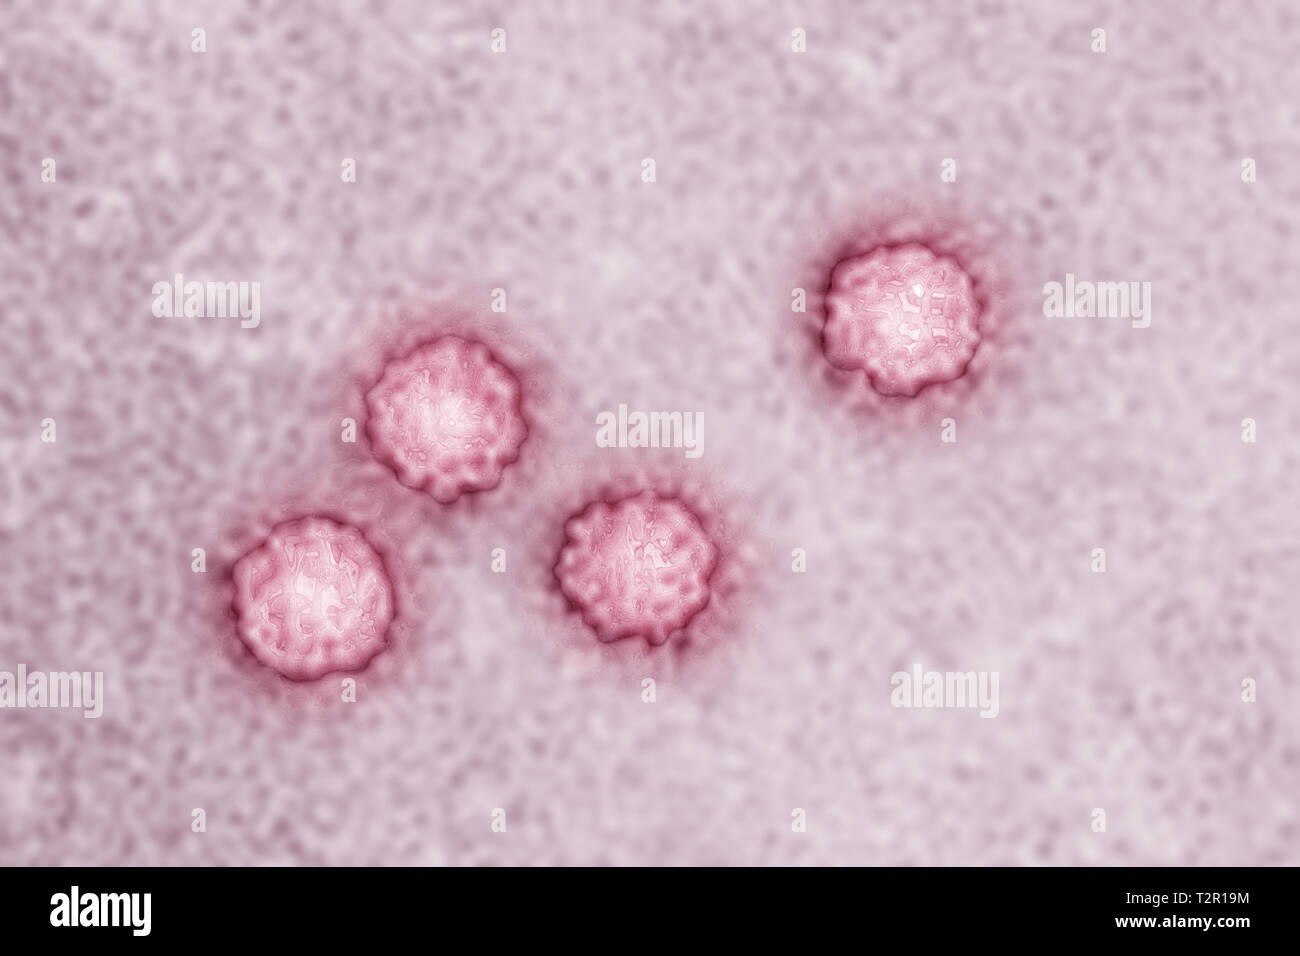 Hepatitis A virus Stock Photo